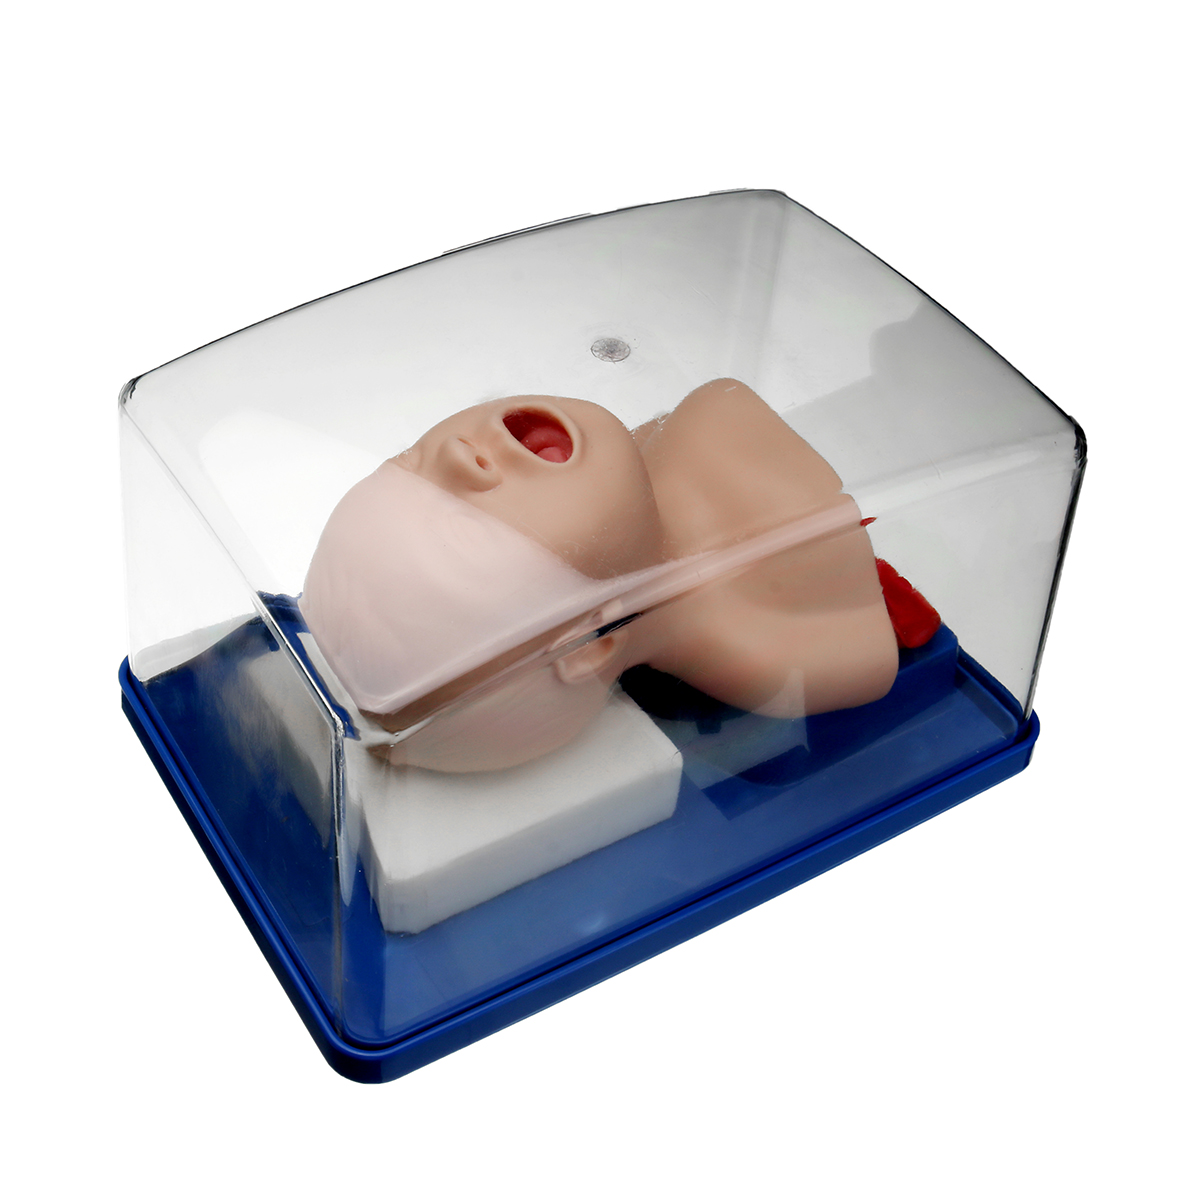 Intubation Manikin Study Teaching Model Baby Infant Airway Management Trainer Medical Model 13